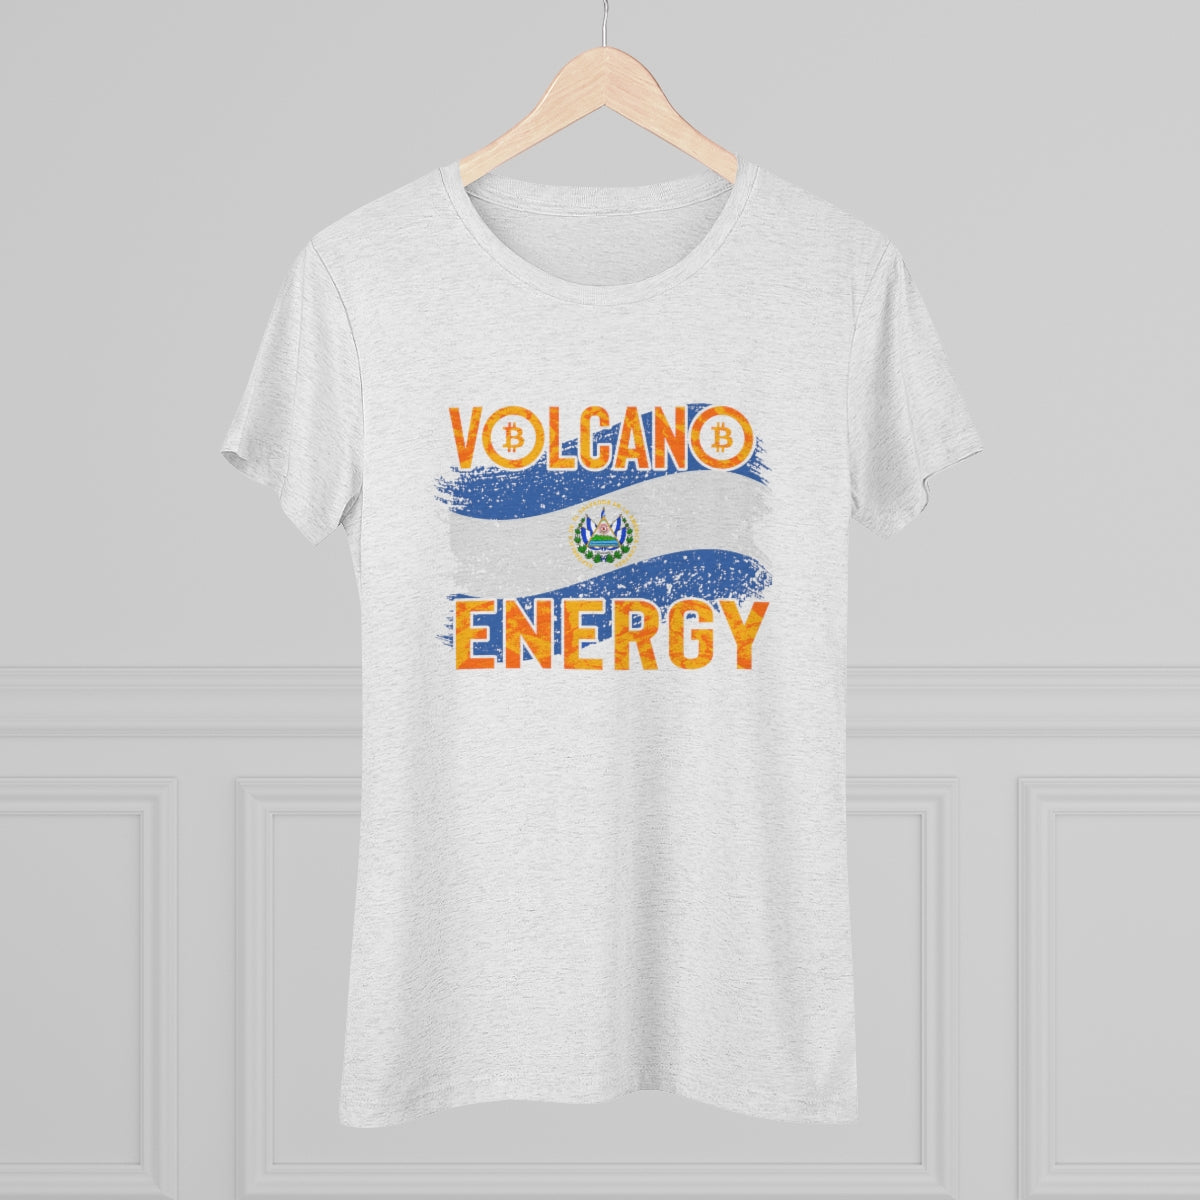 Volcano Energy Women's  Tee